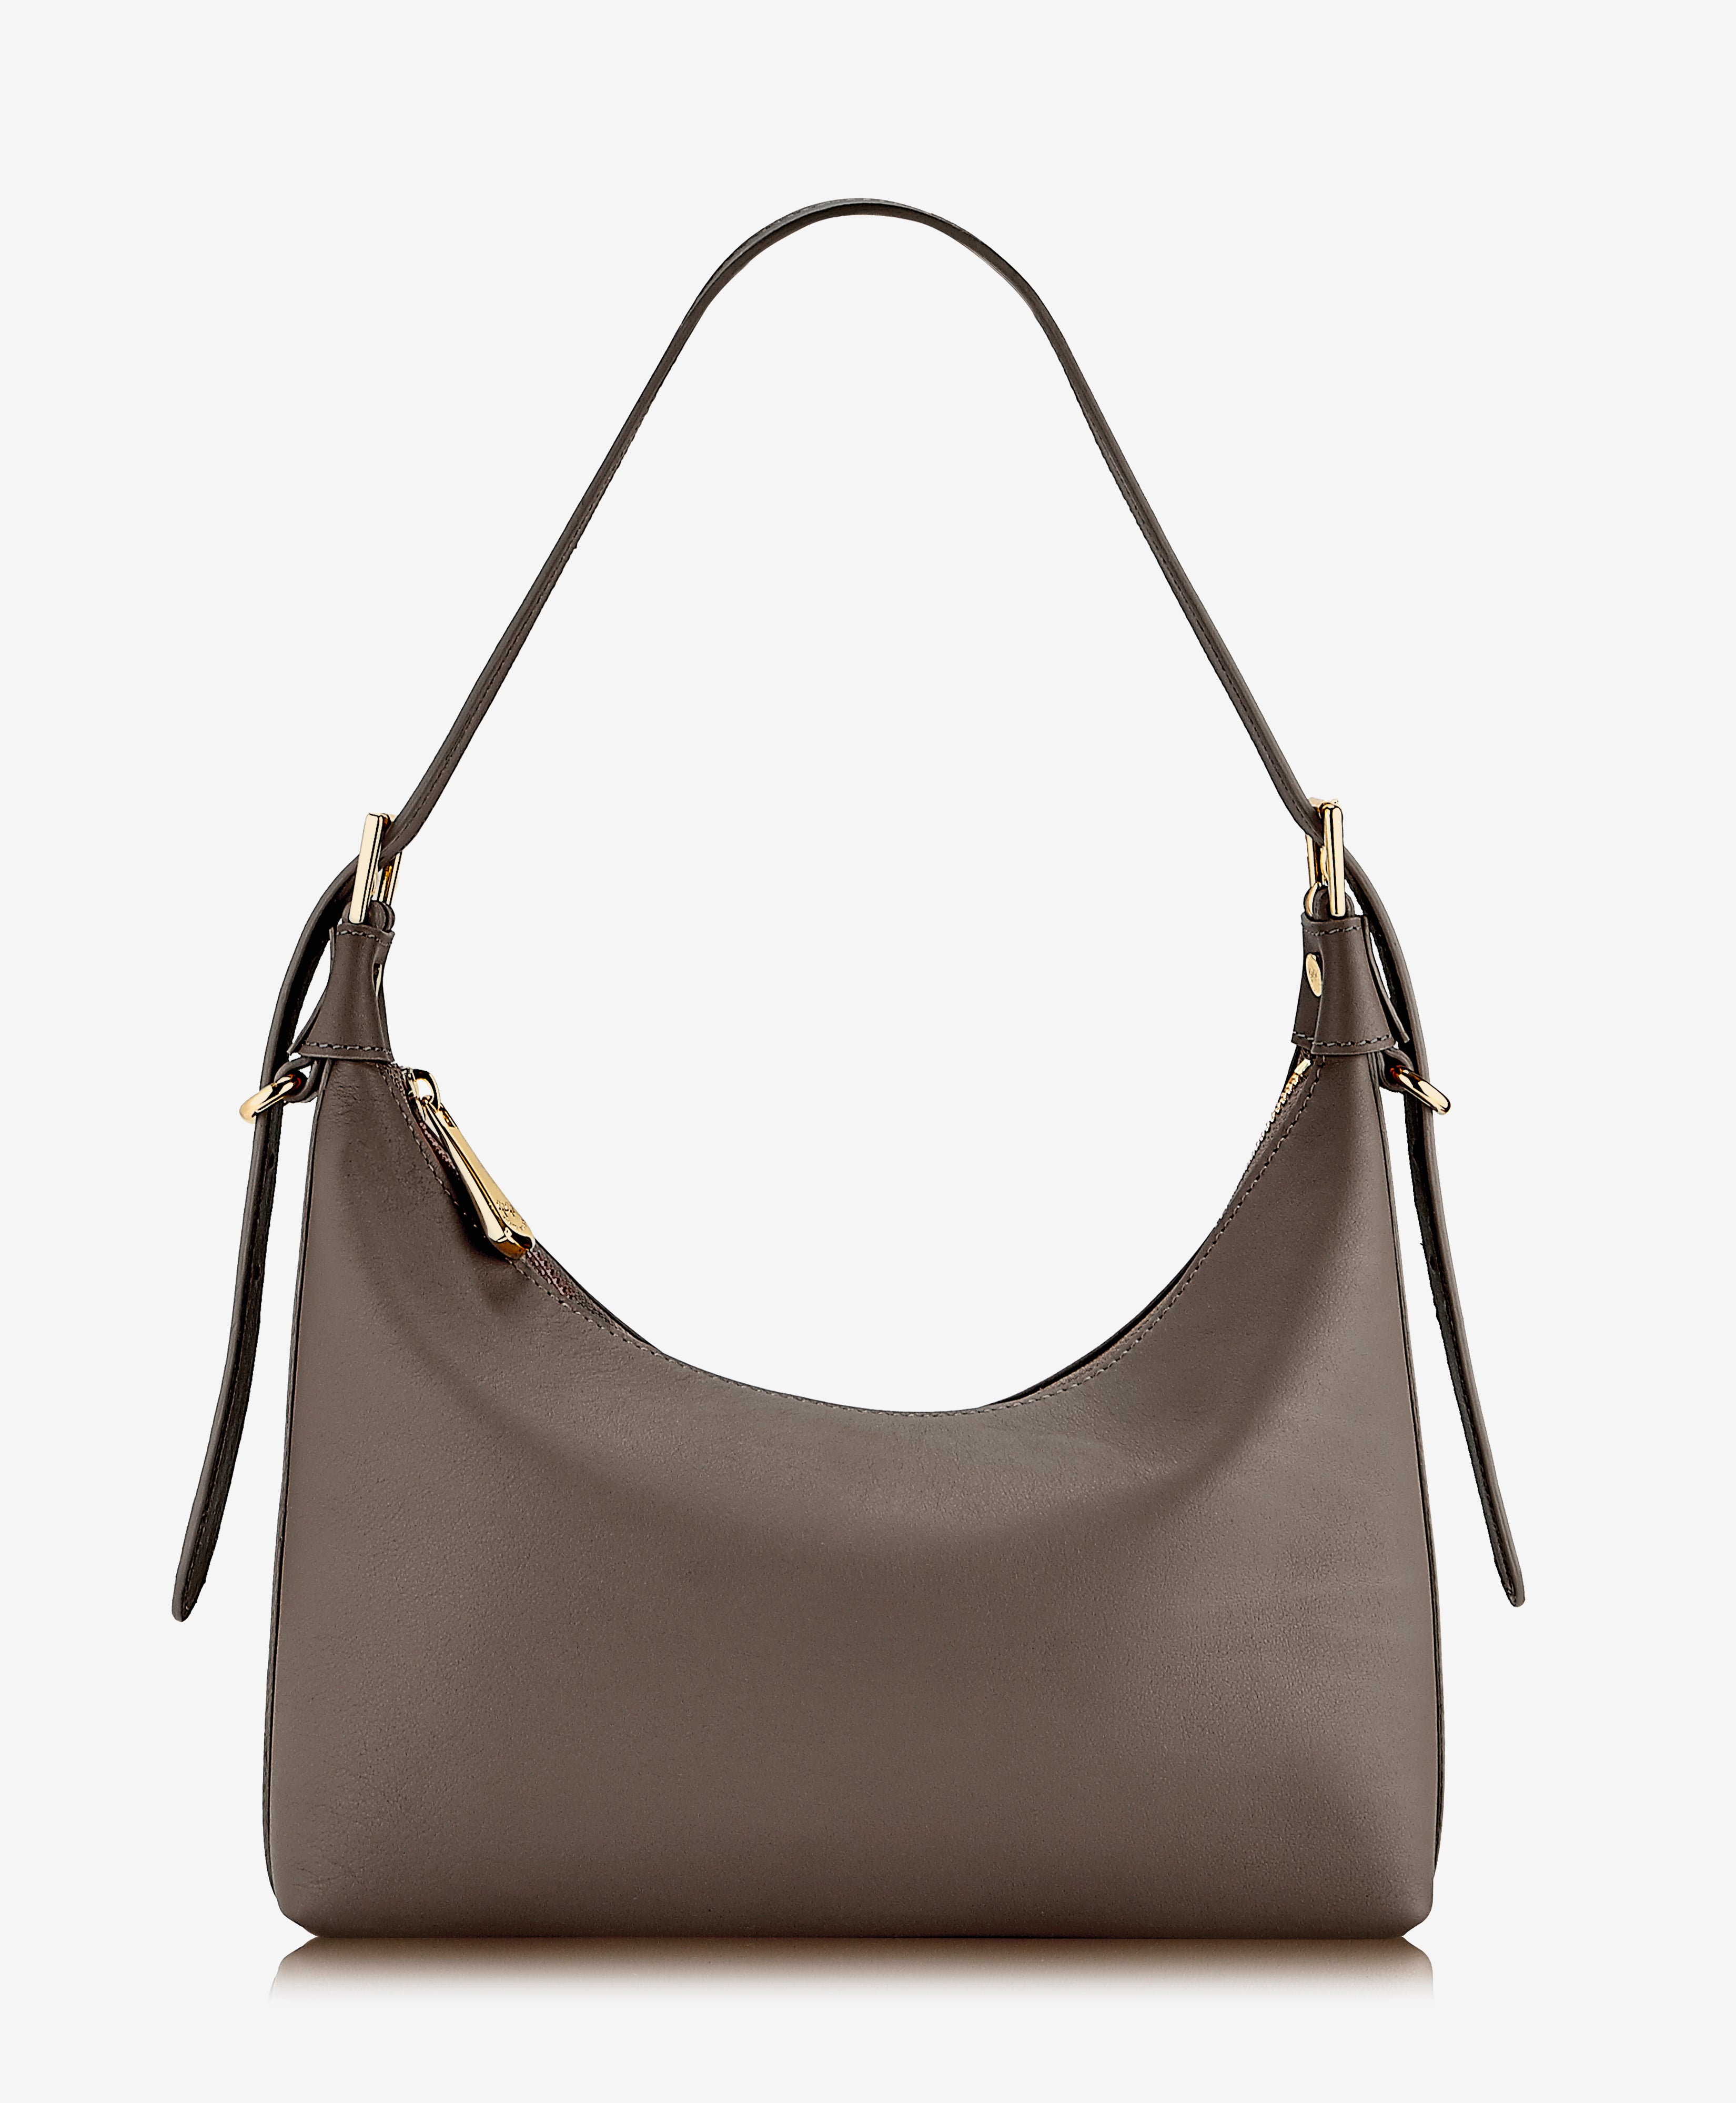 Over Earth Soft Leather Handbags for Women Shoulder Hobo Bag Large Tote  Crossbody Bag